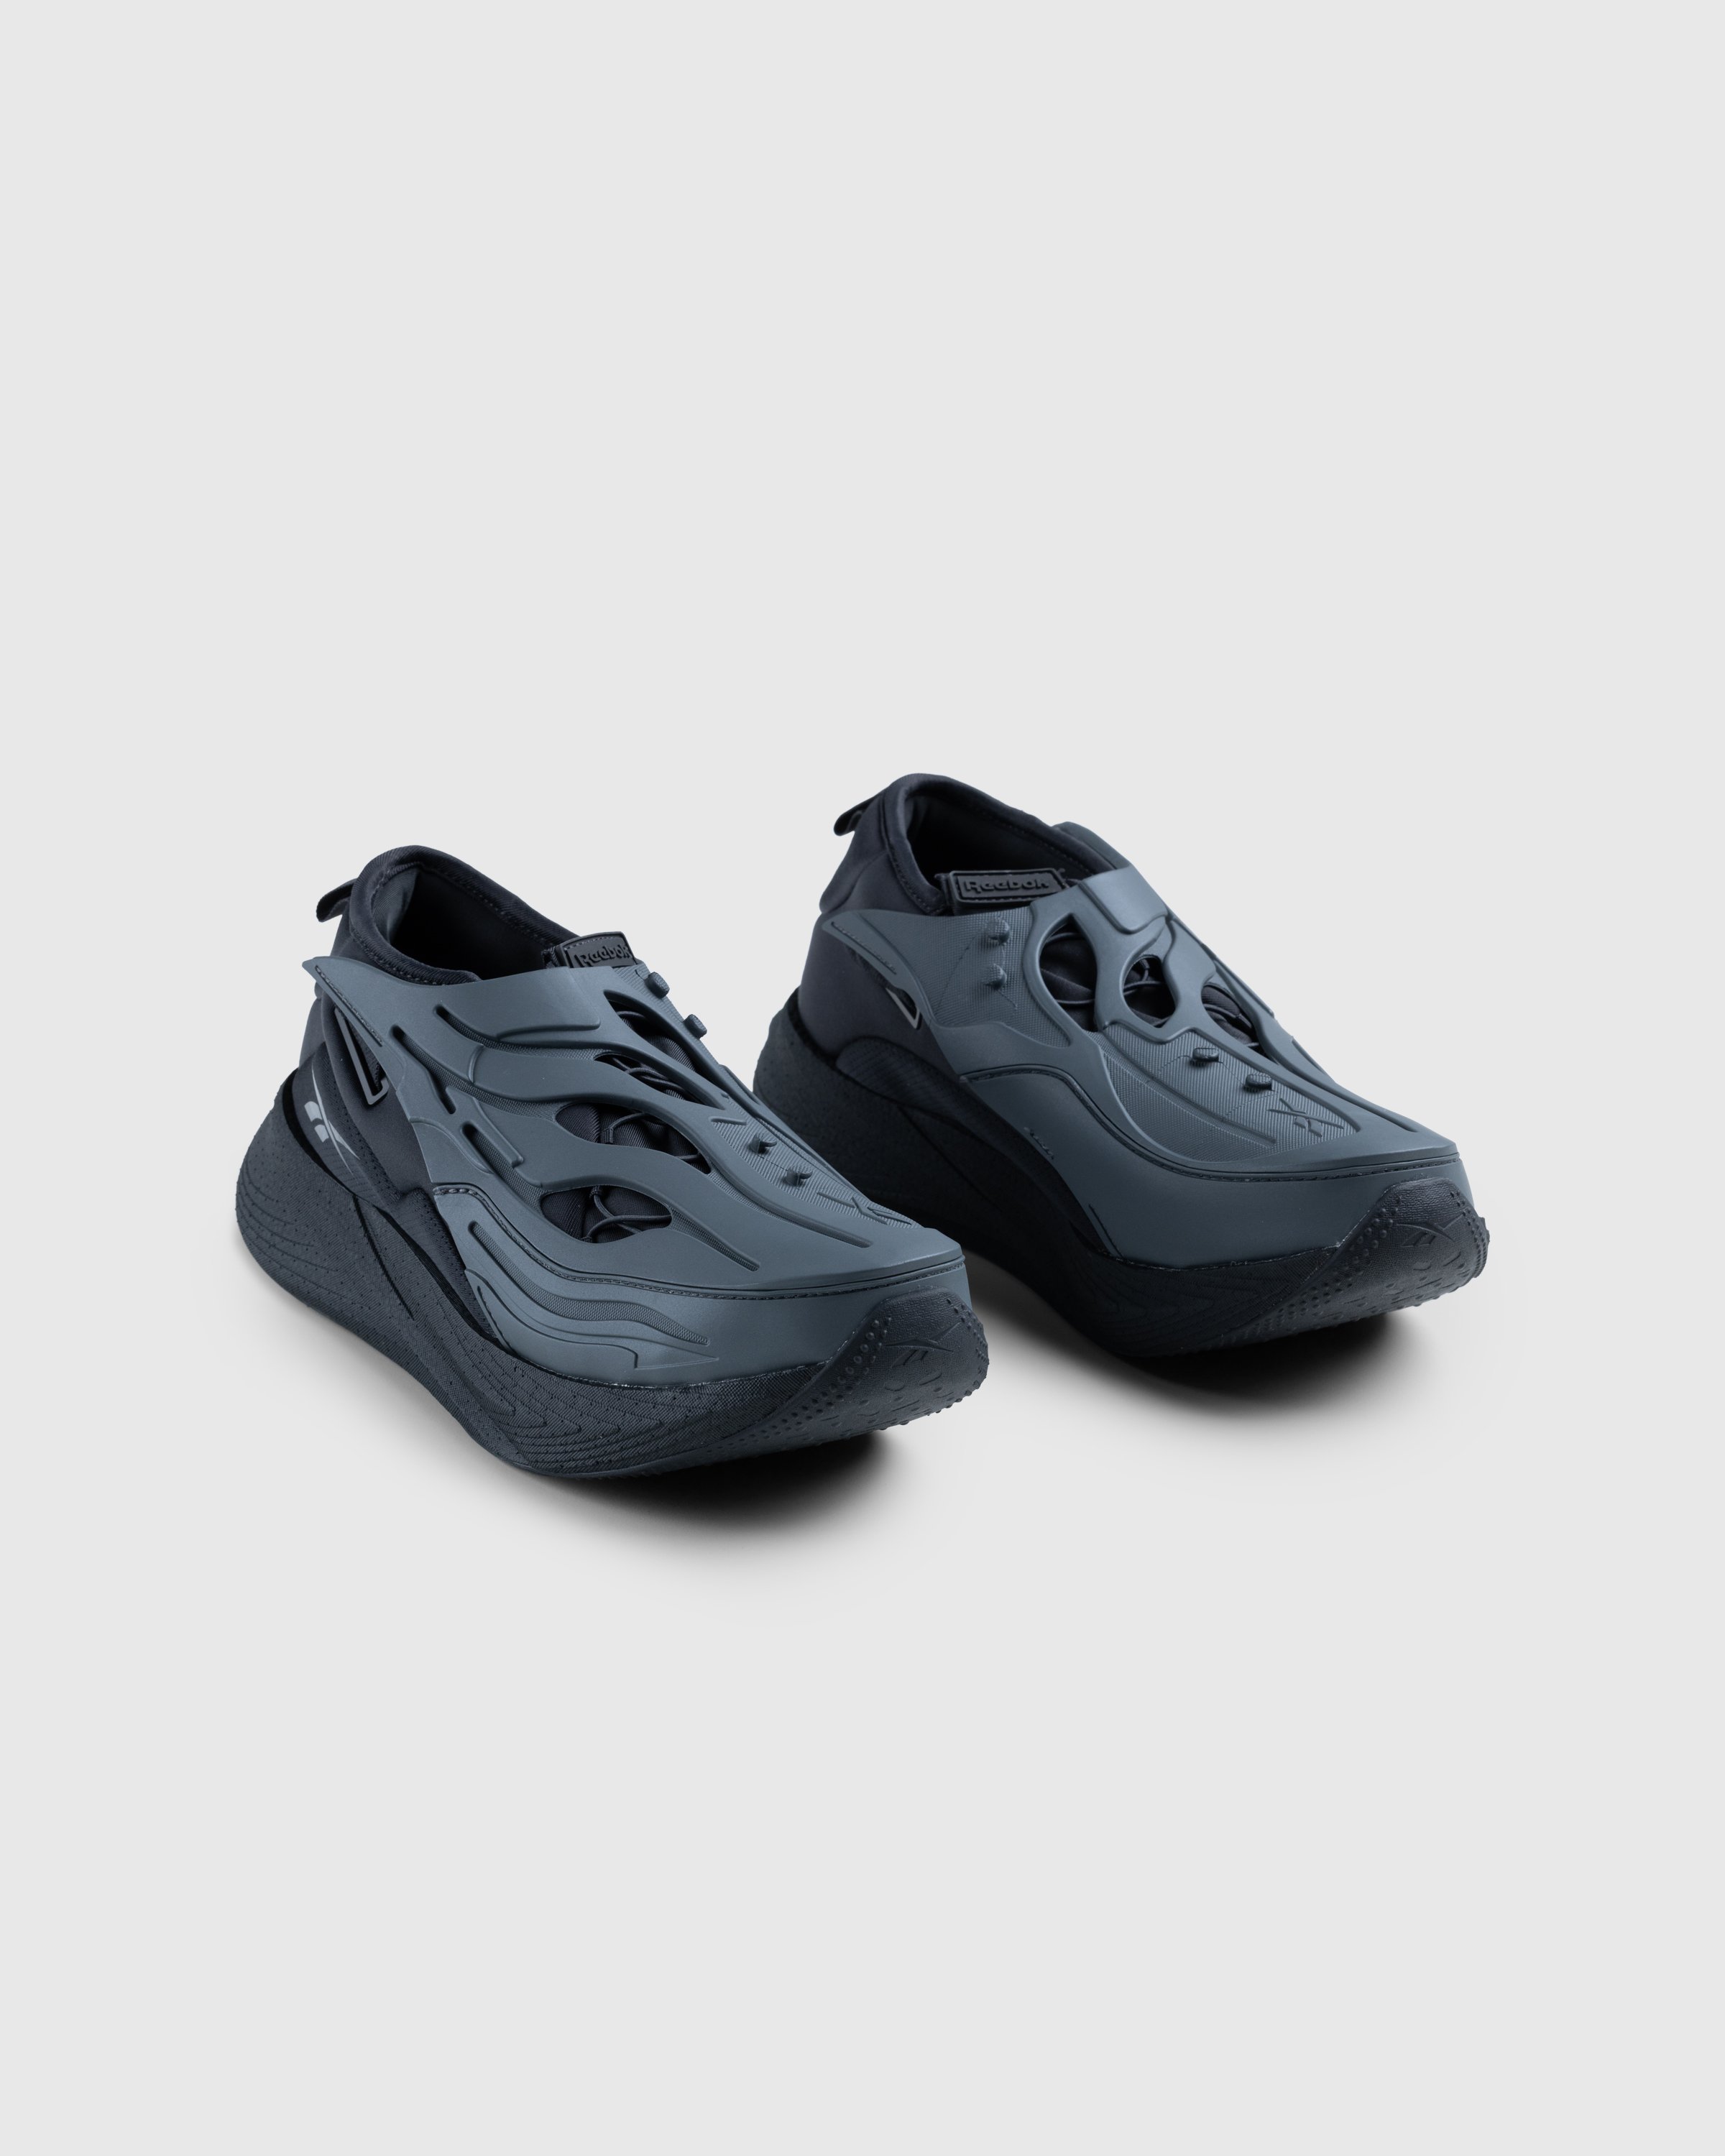 Reebok - FLOATRIDE BLACK/SILVER - Footwear - Black - Image 3